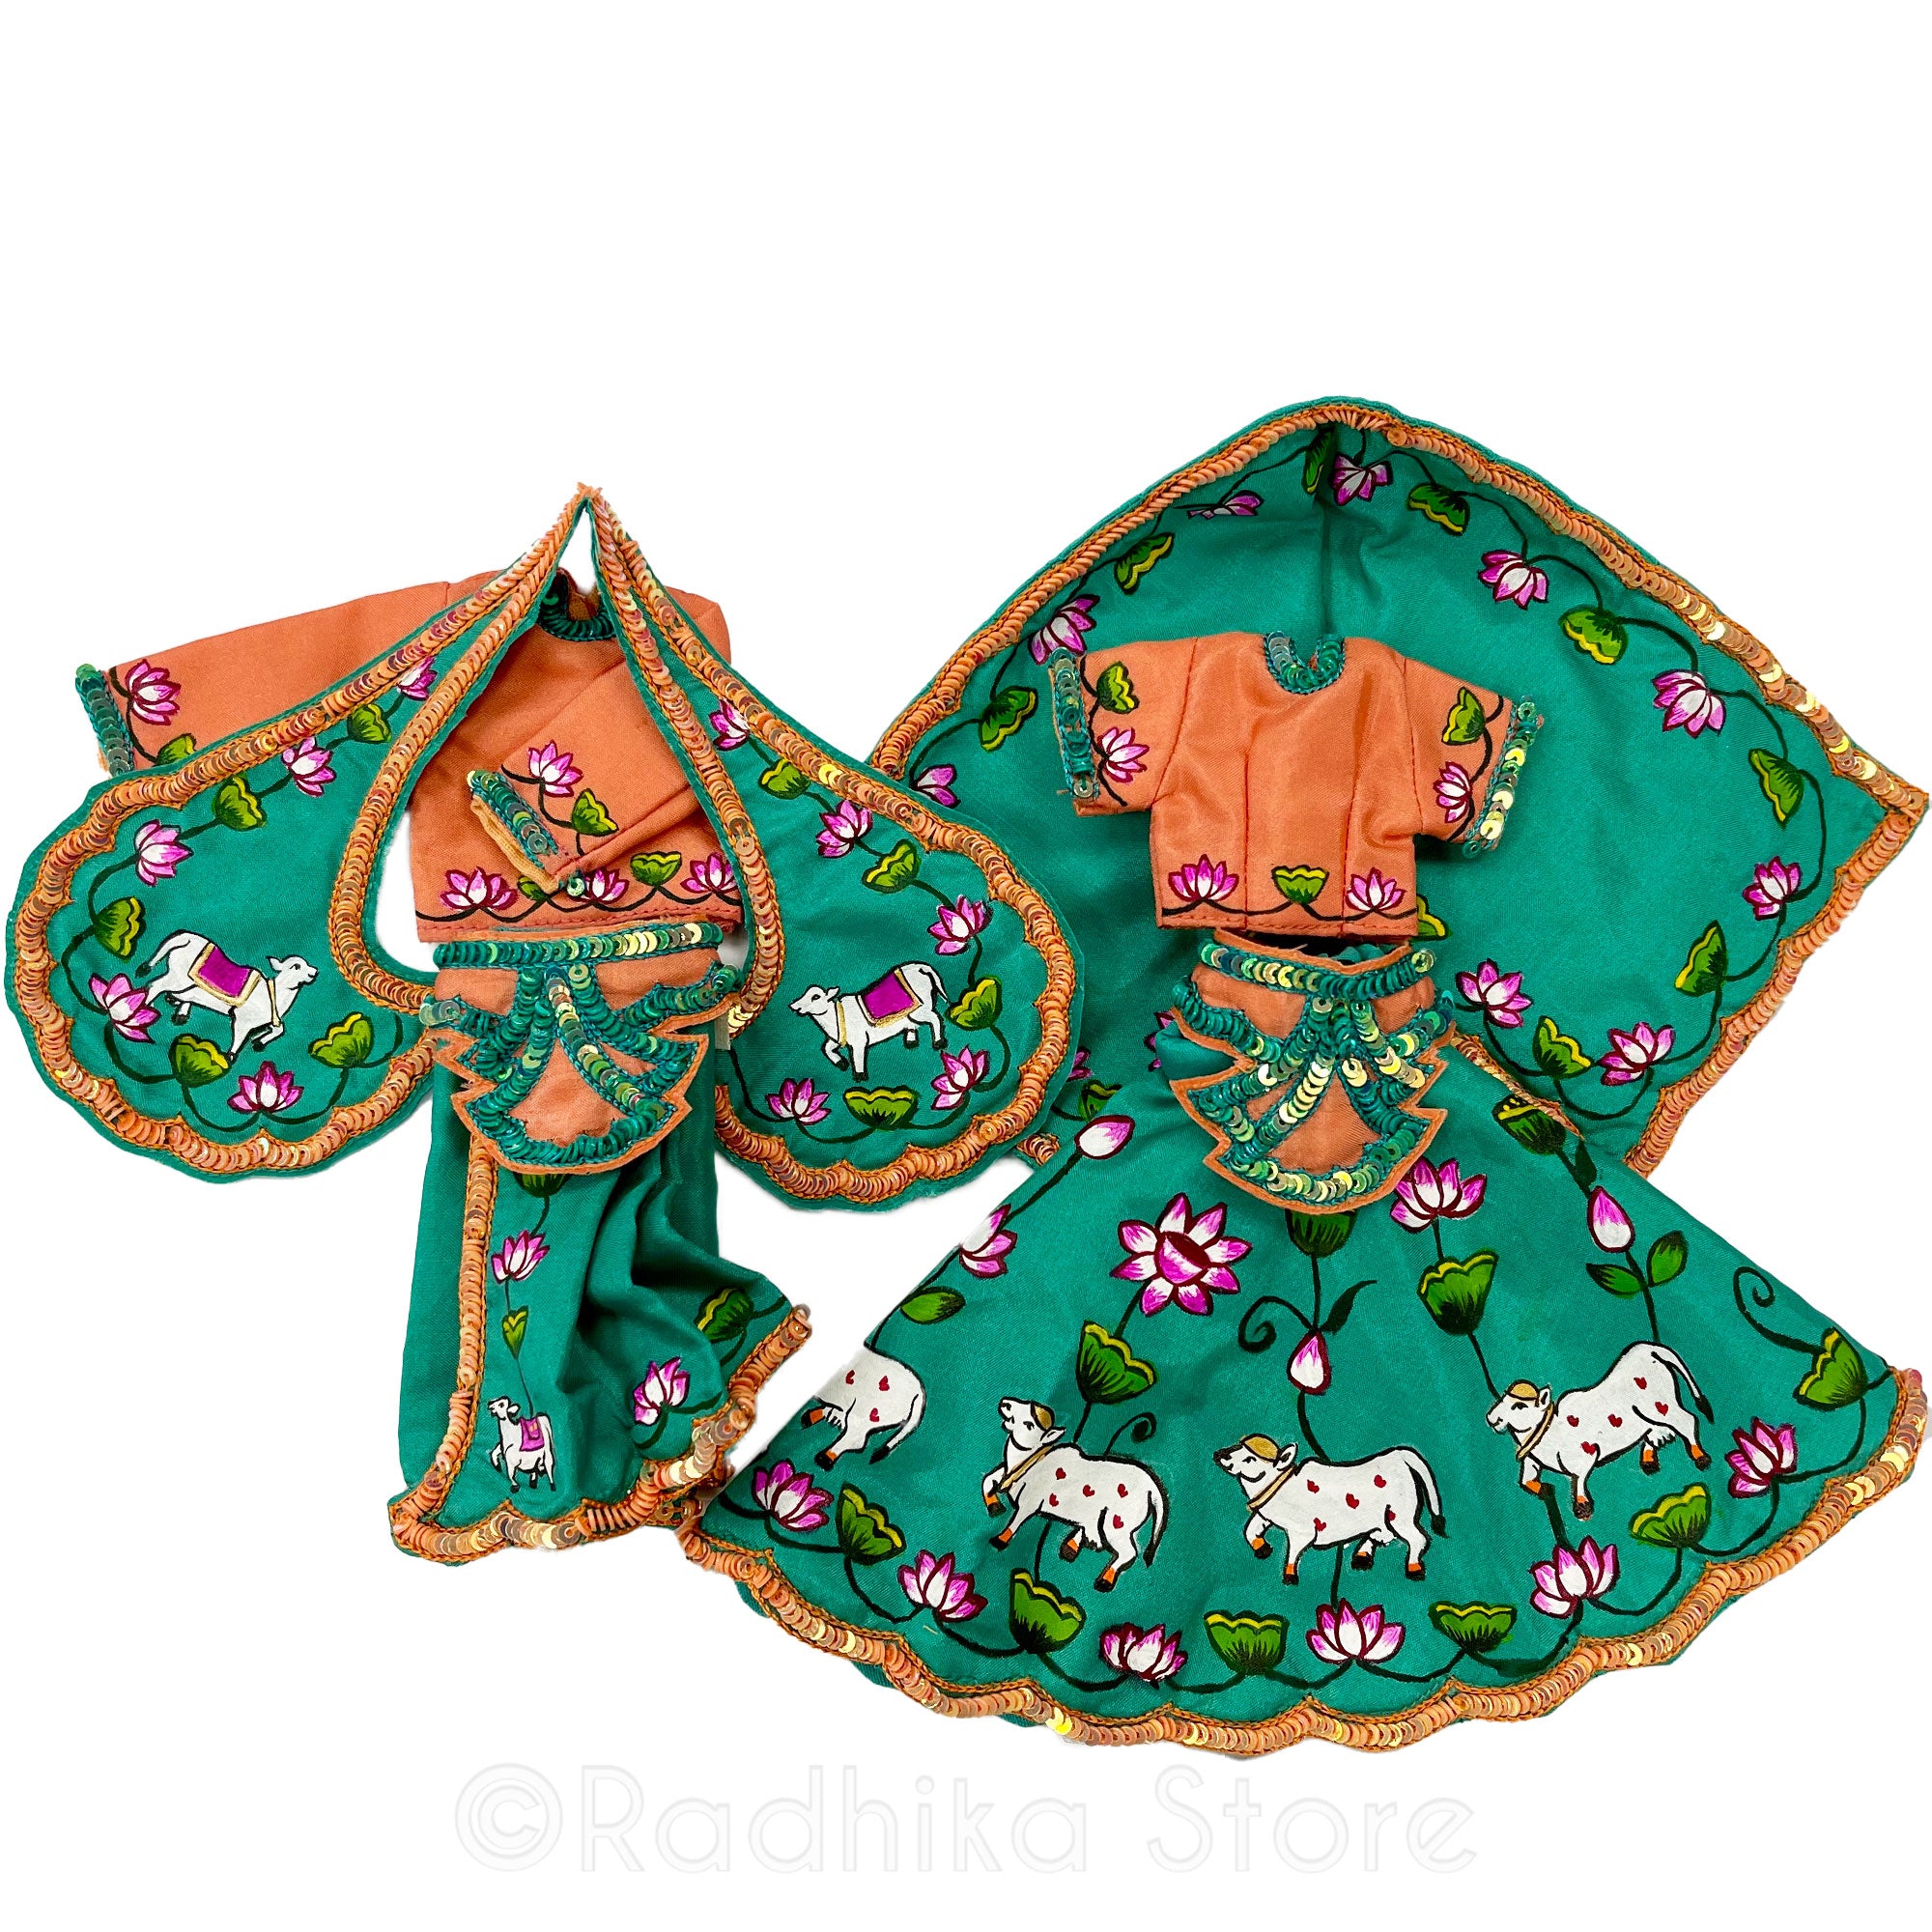 Kusam Sarovara Surabhi - Peach and Teal Green - Radha Krishna Deity Outfit- With Belt